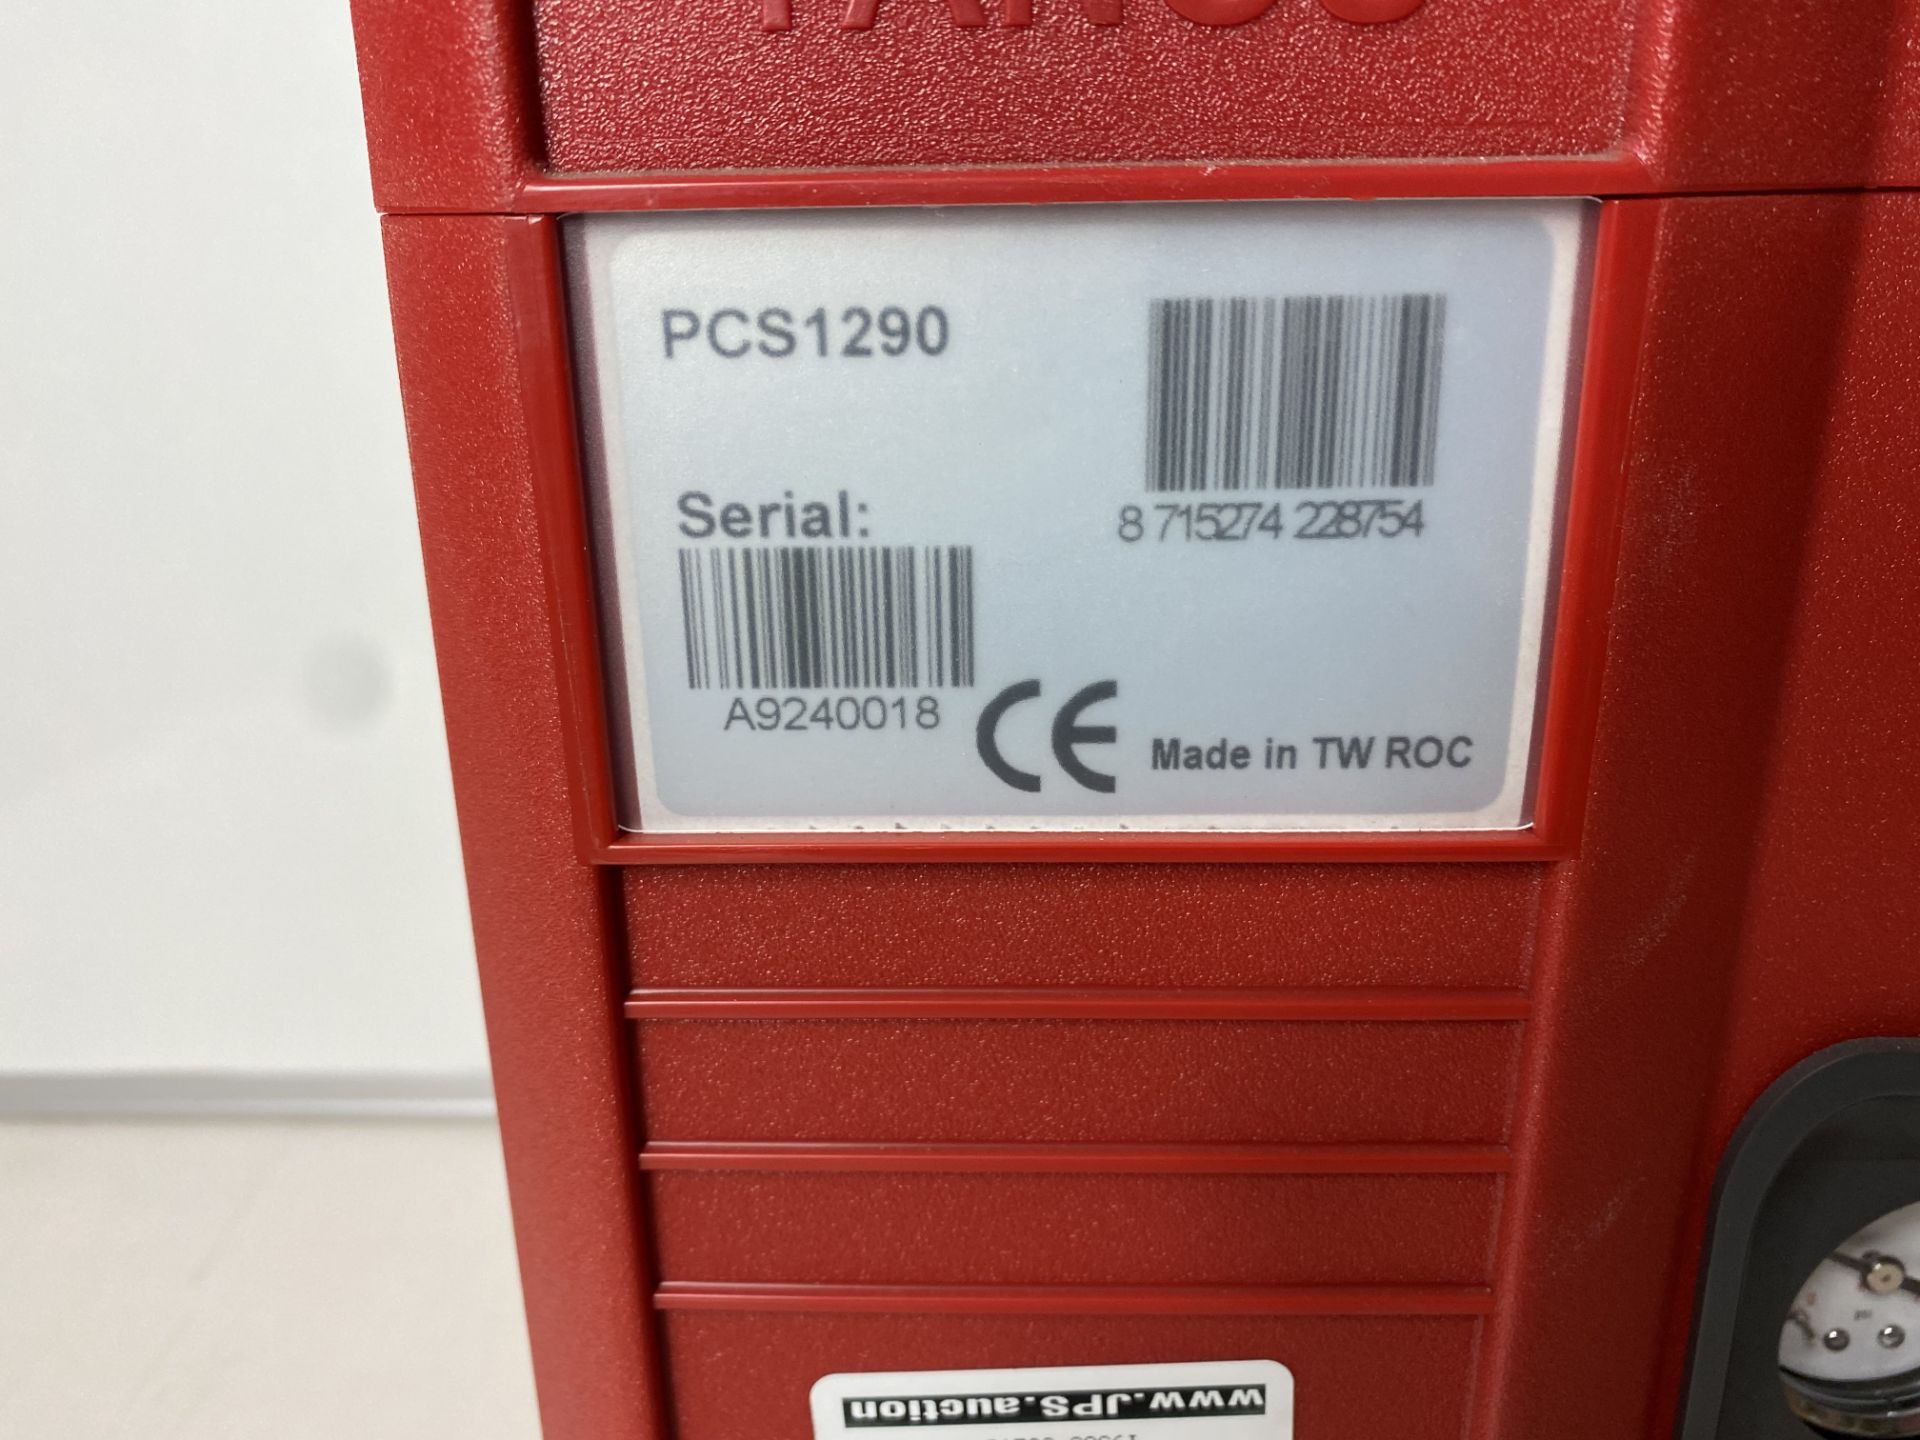 Senco PCS1290 Air Compressor in Systainer 230V - Image 2 of 4